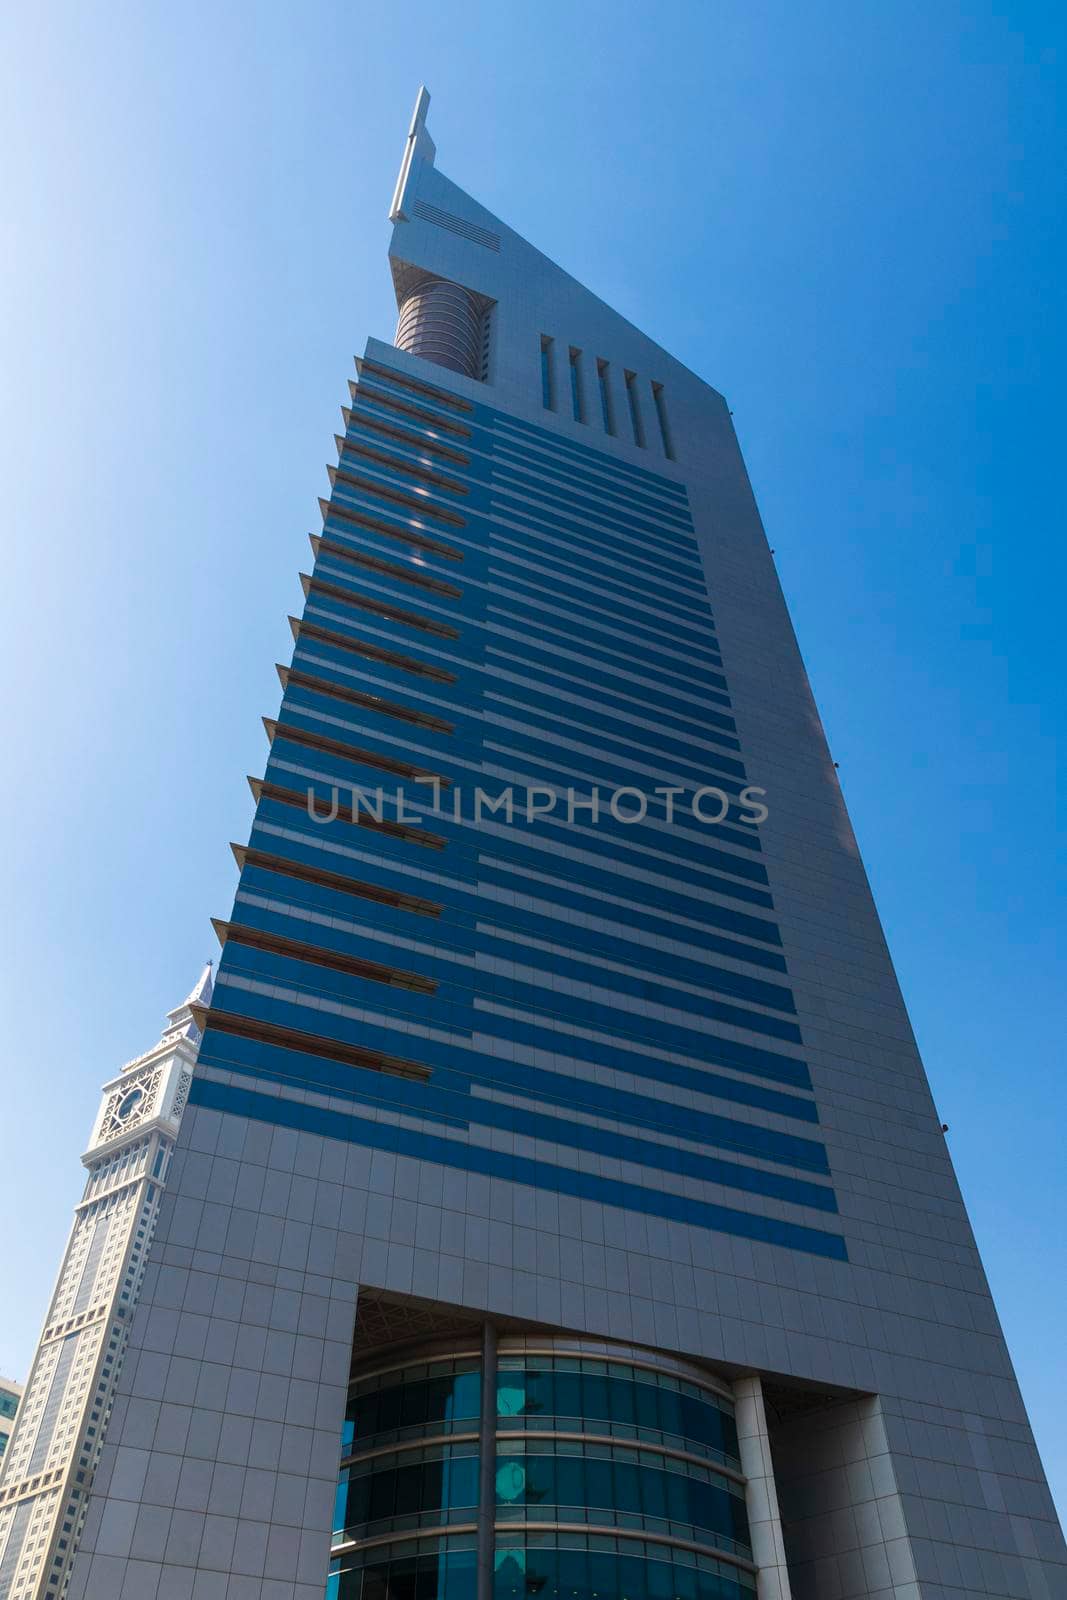 Dubai, UAE - 02.04.2021 Shot of a very well known landmark in Dabai, Emirates towers